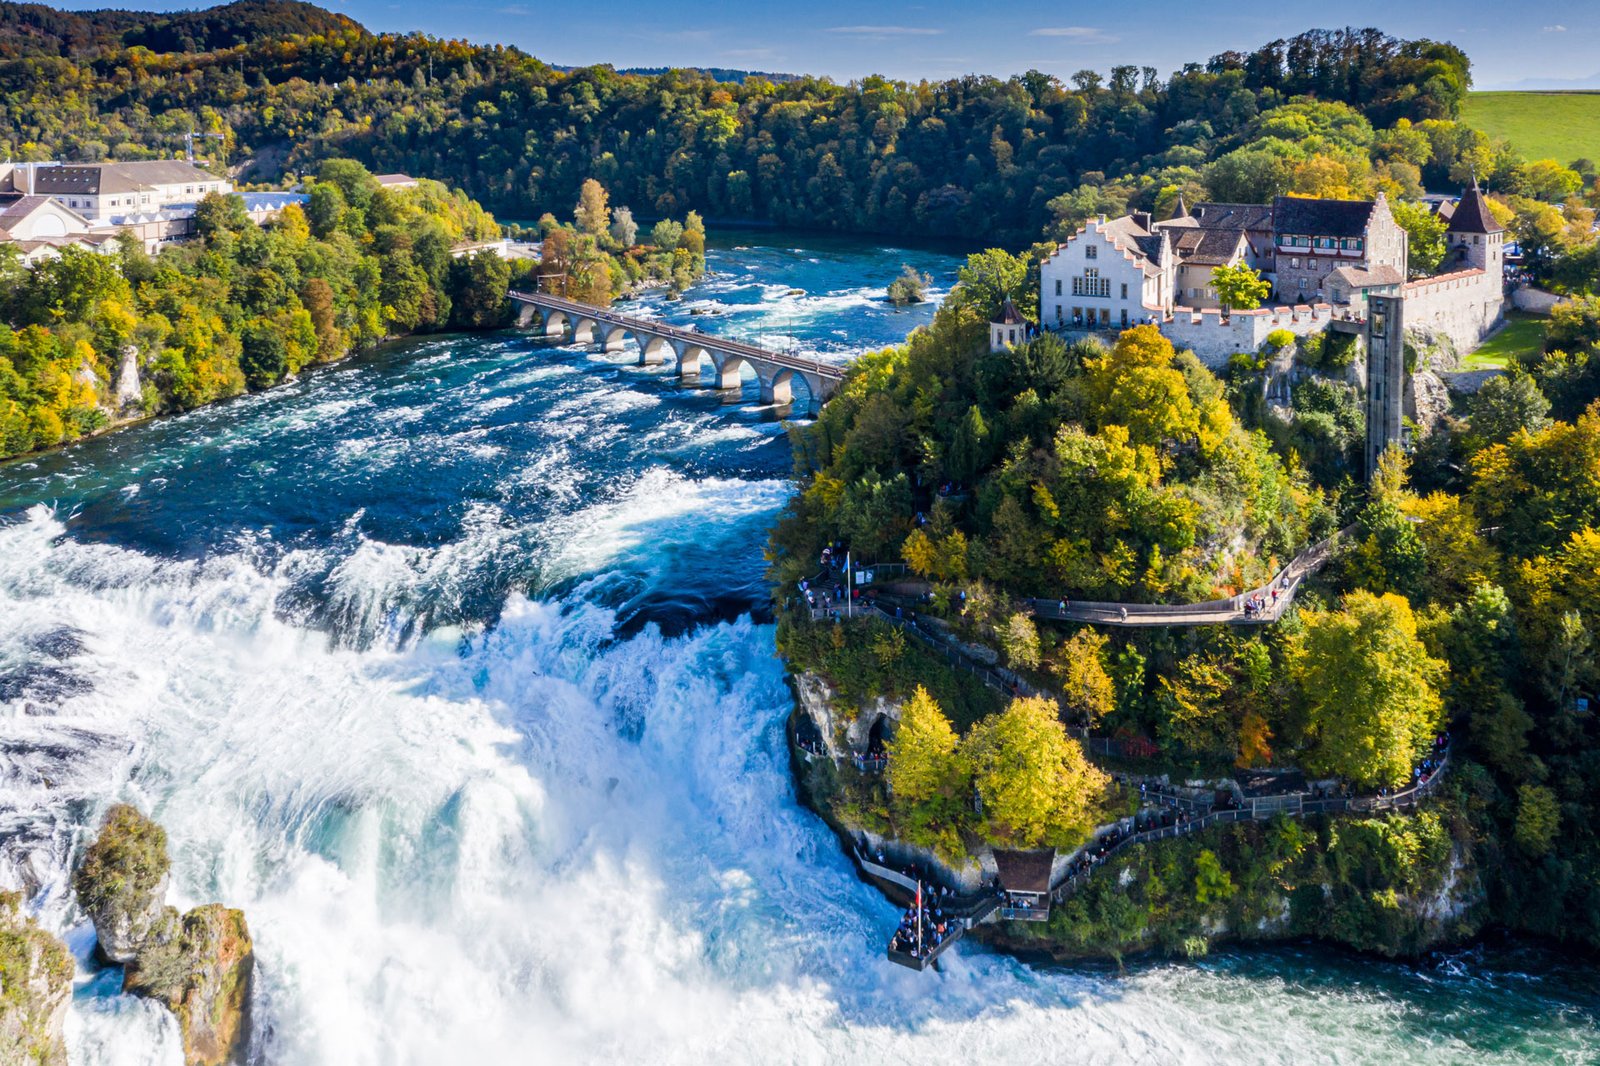 The magnificent Rhine Falls at Schaffhausen